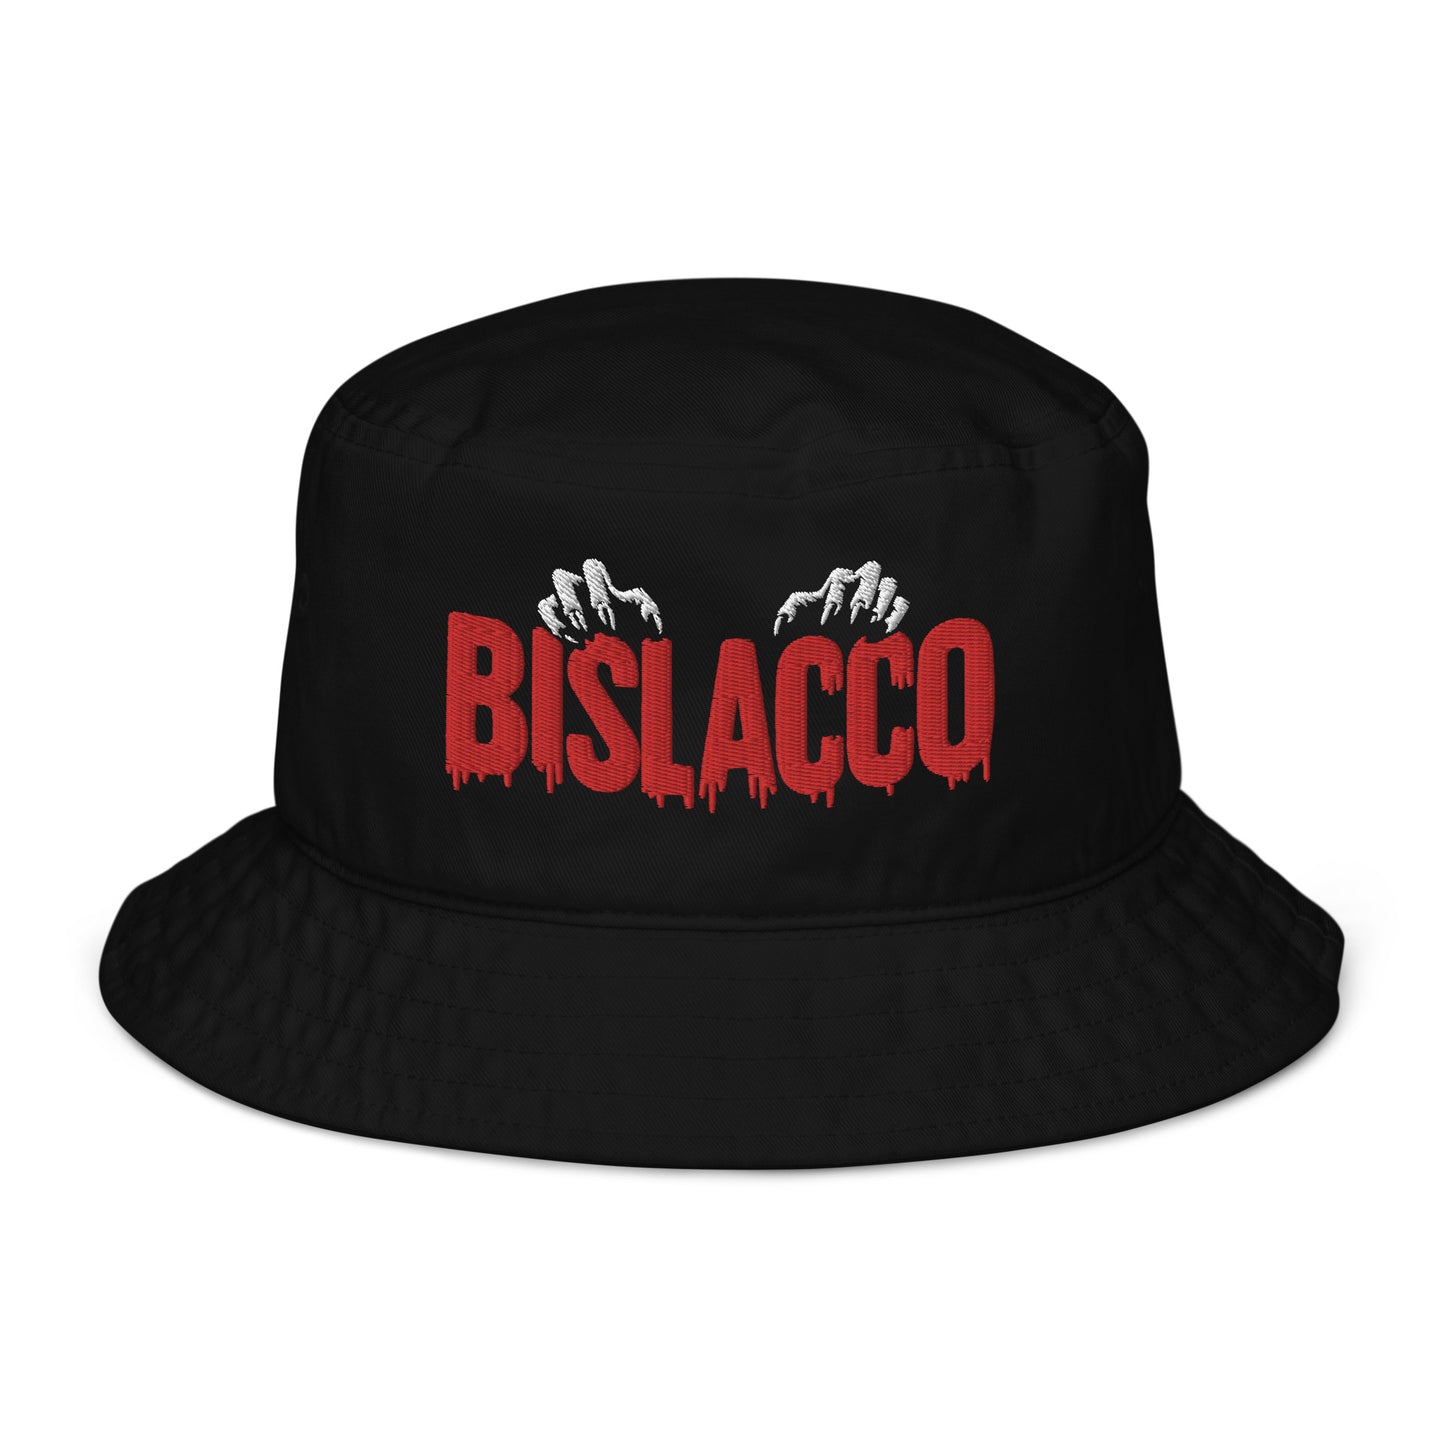 Bislacco fishing hat in organic cotton